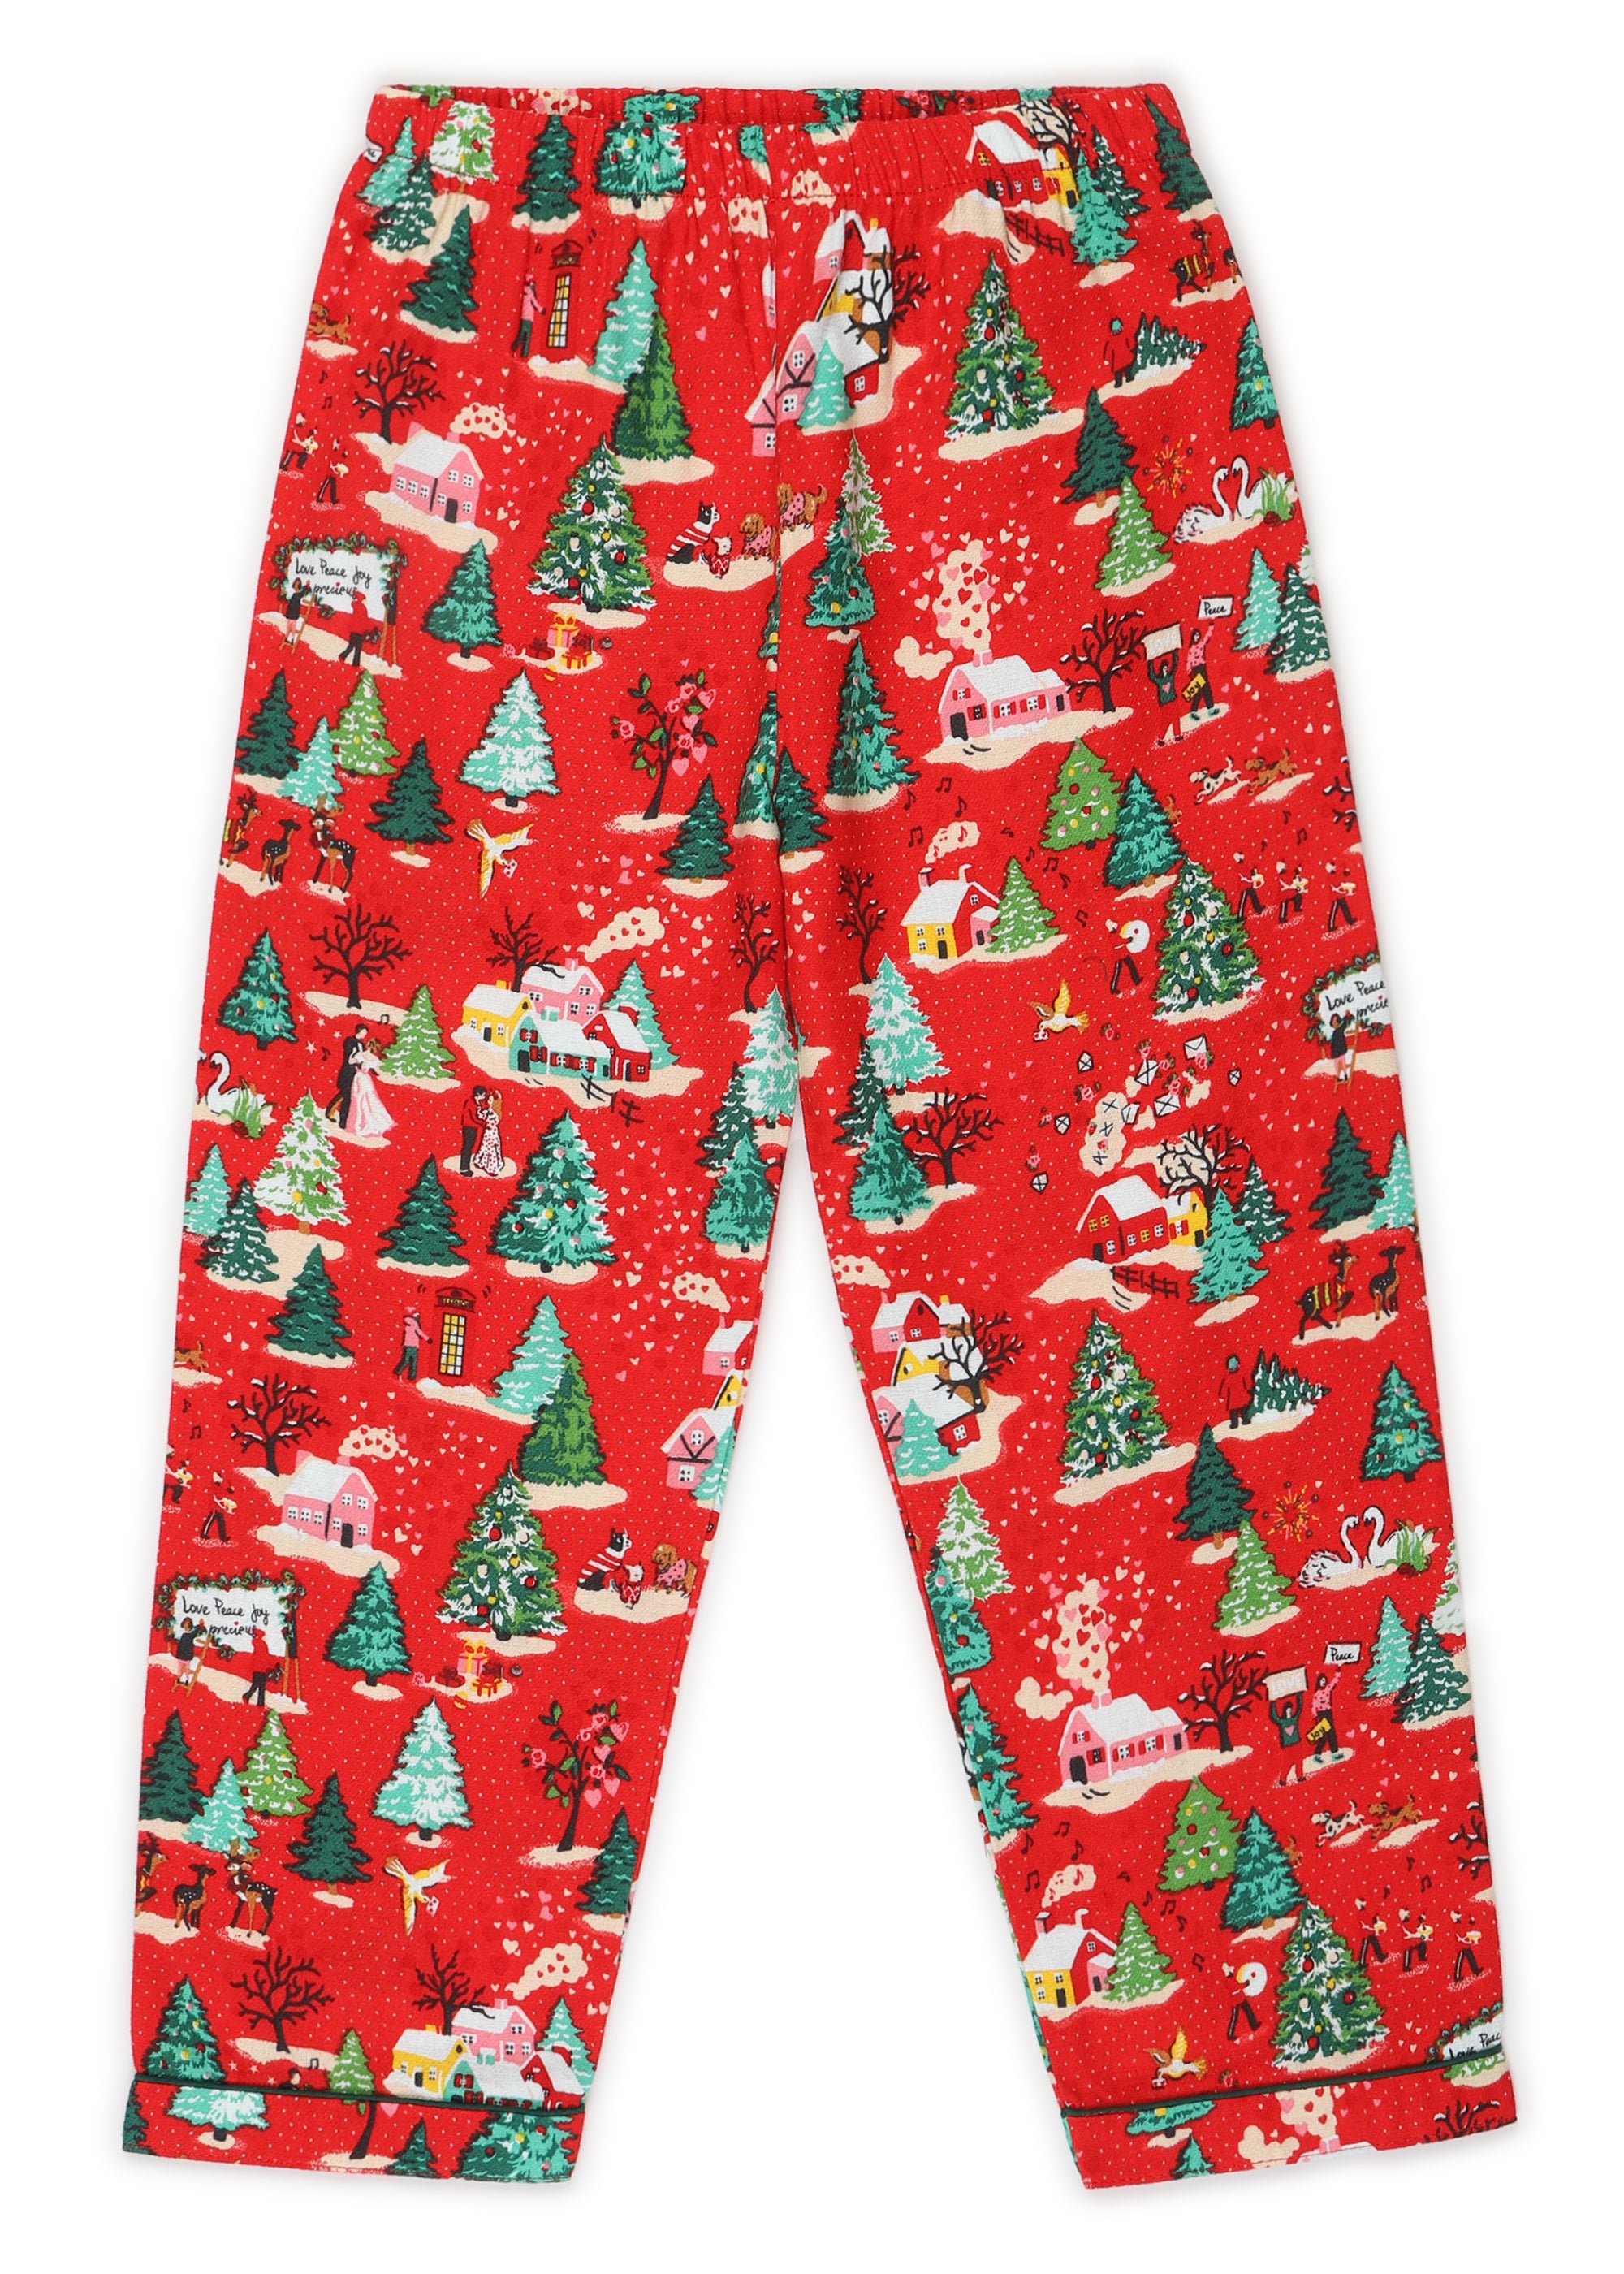 Christmas Wonderland Cotton Flannel Long Sleeve Kid's Night Suit